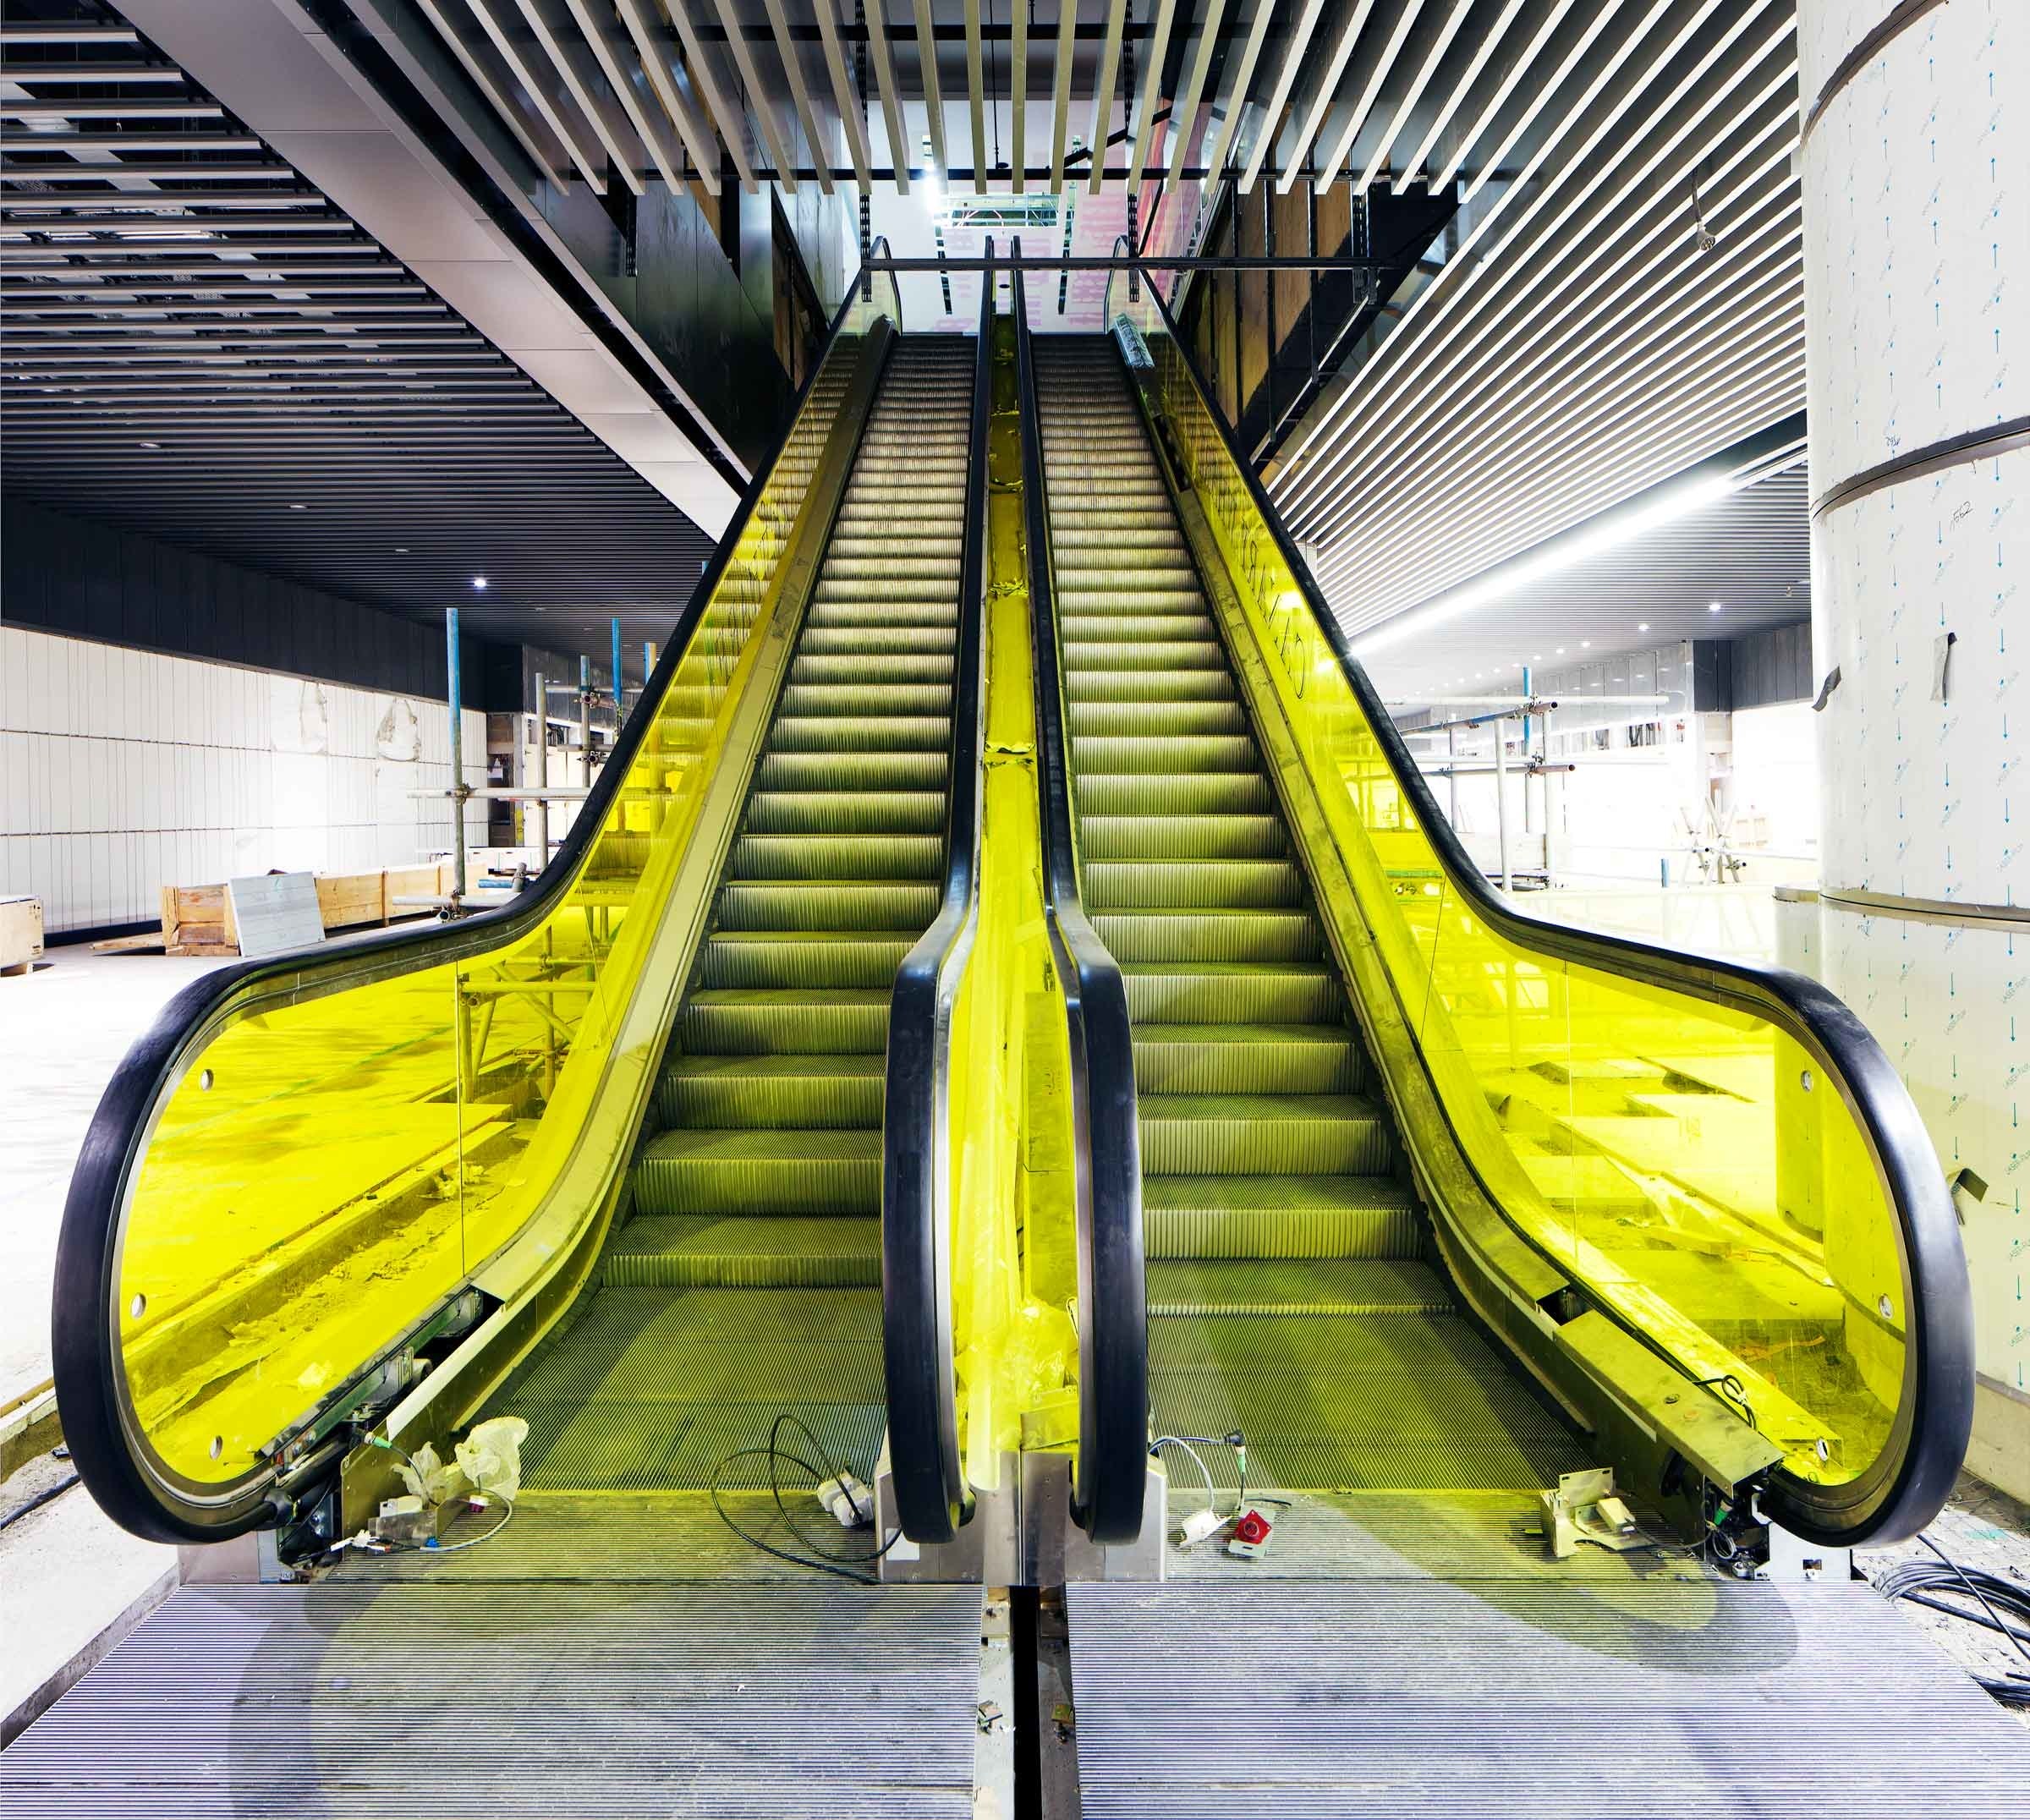 Watch London Crossrail Workers Install 54 Escalators in 2 Minutes ...